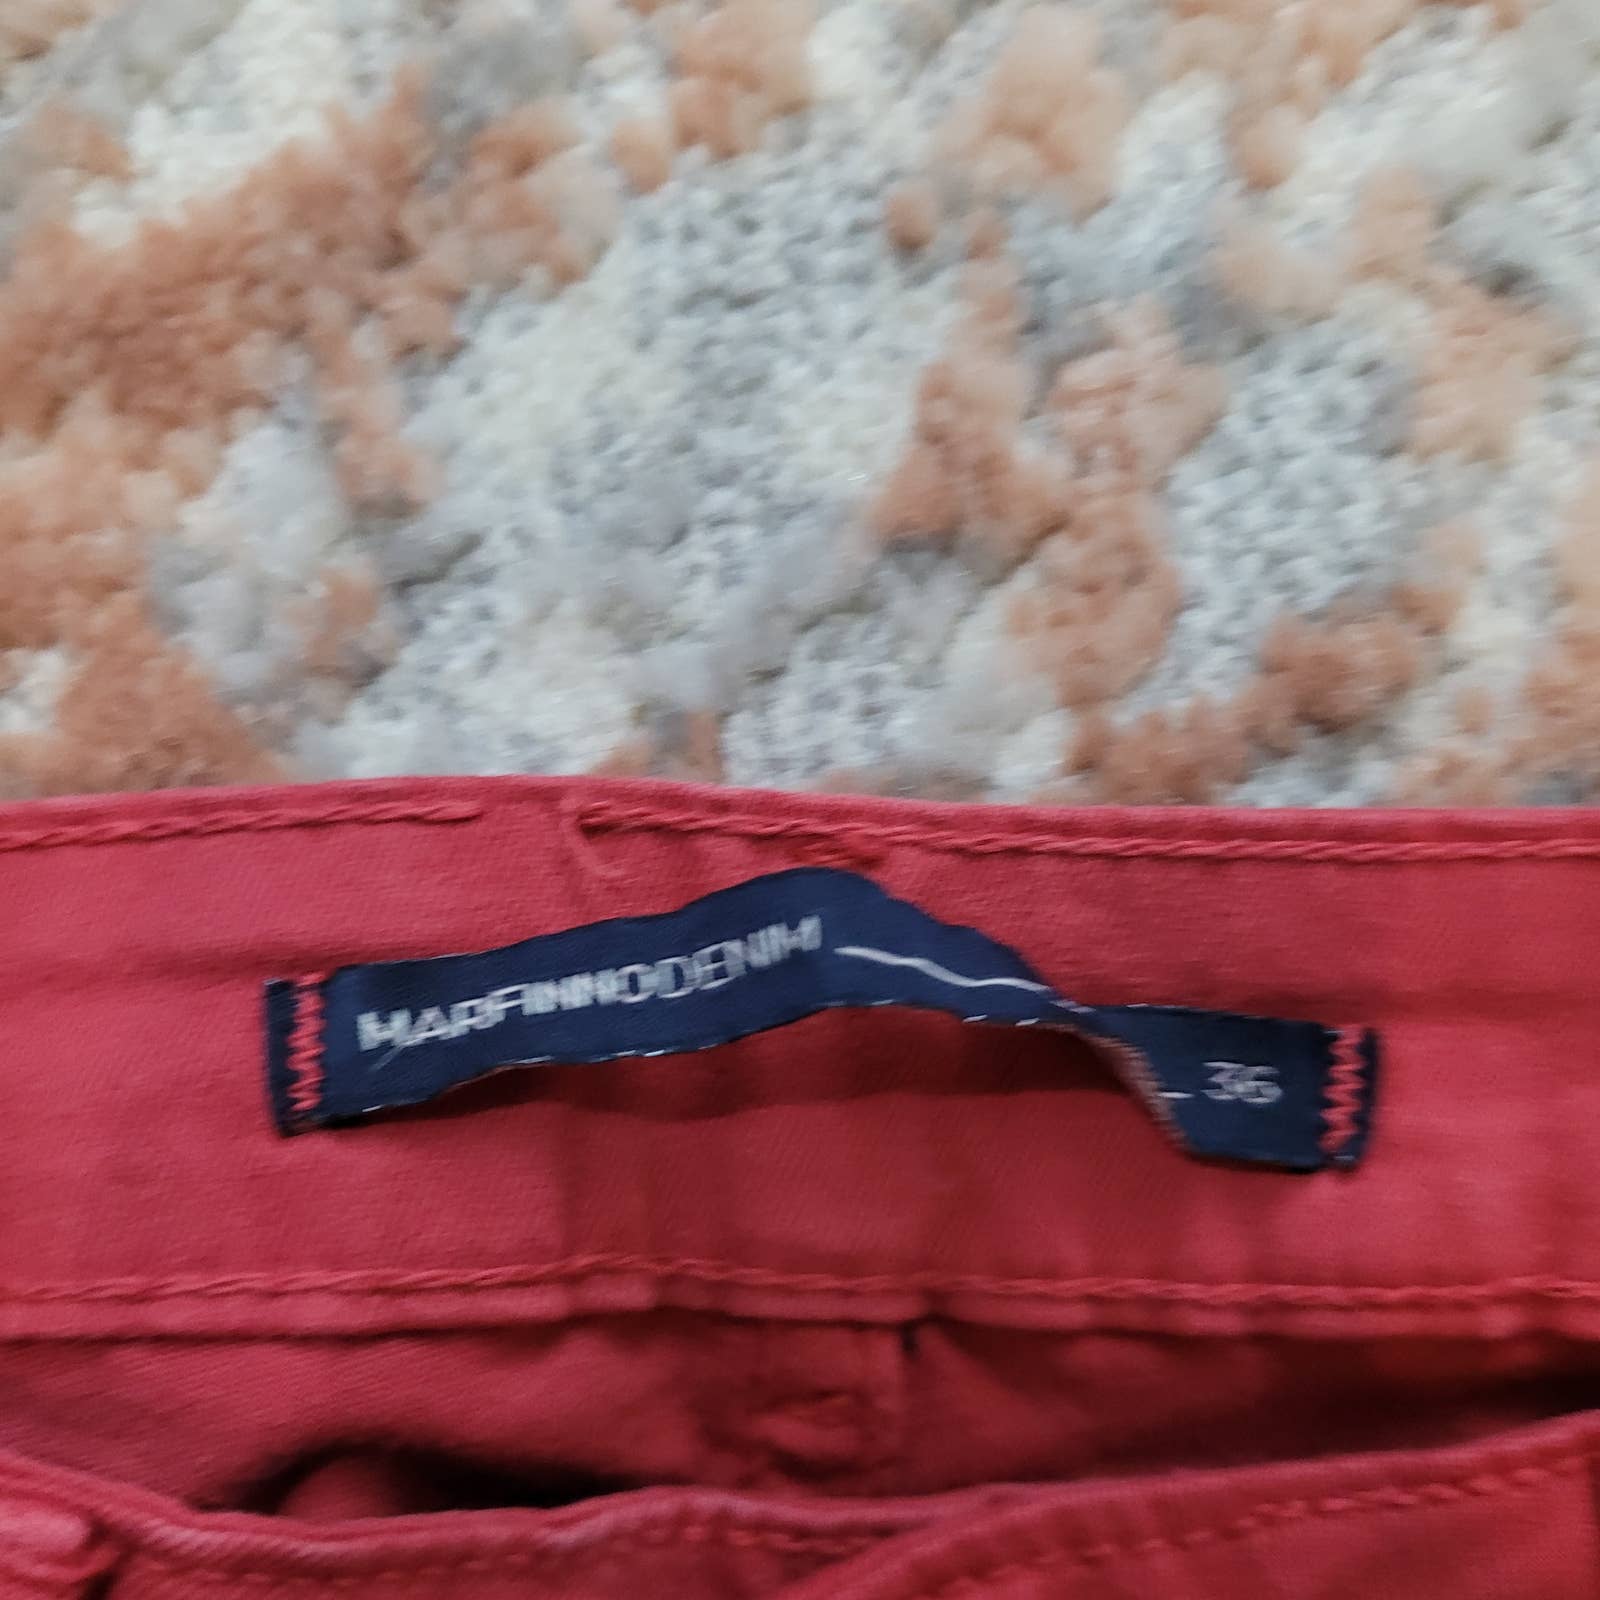 Marfinno Denim Red Skinny Jeans - Size EU 36Markita's ClosetMarfinno Denim